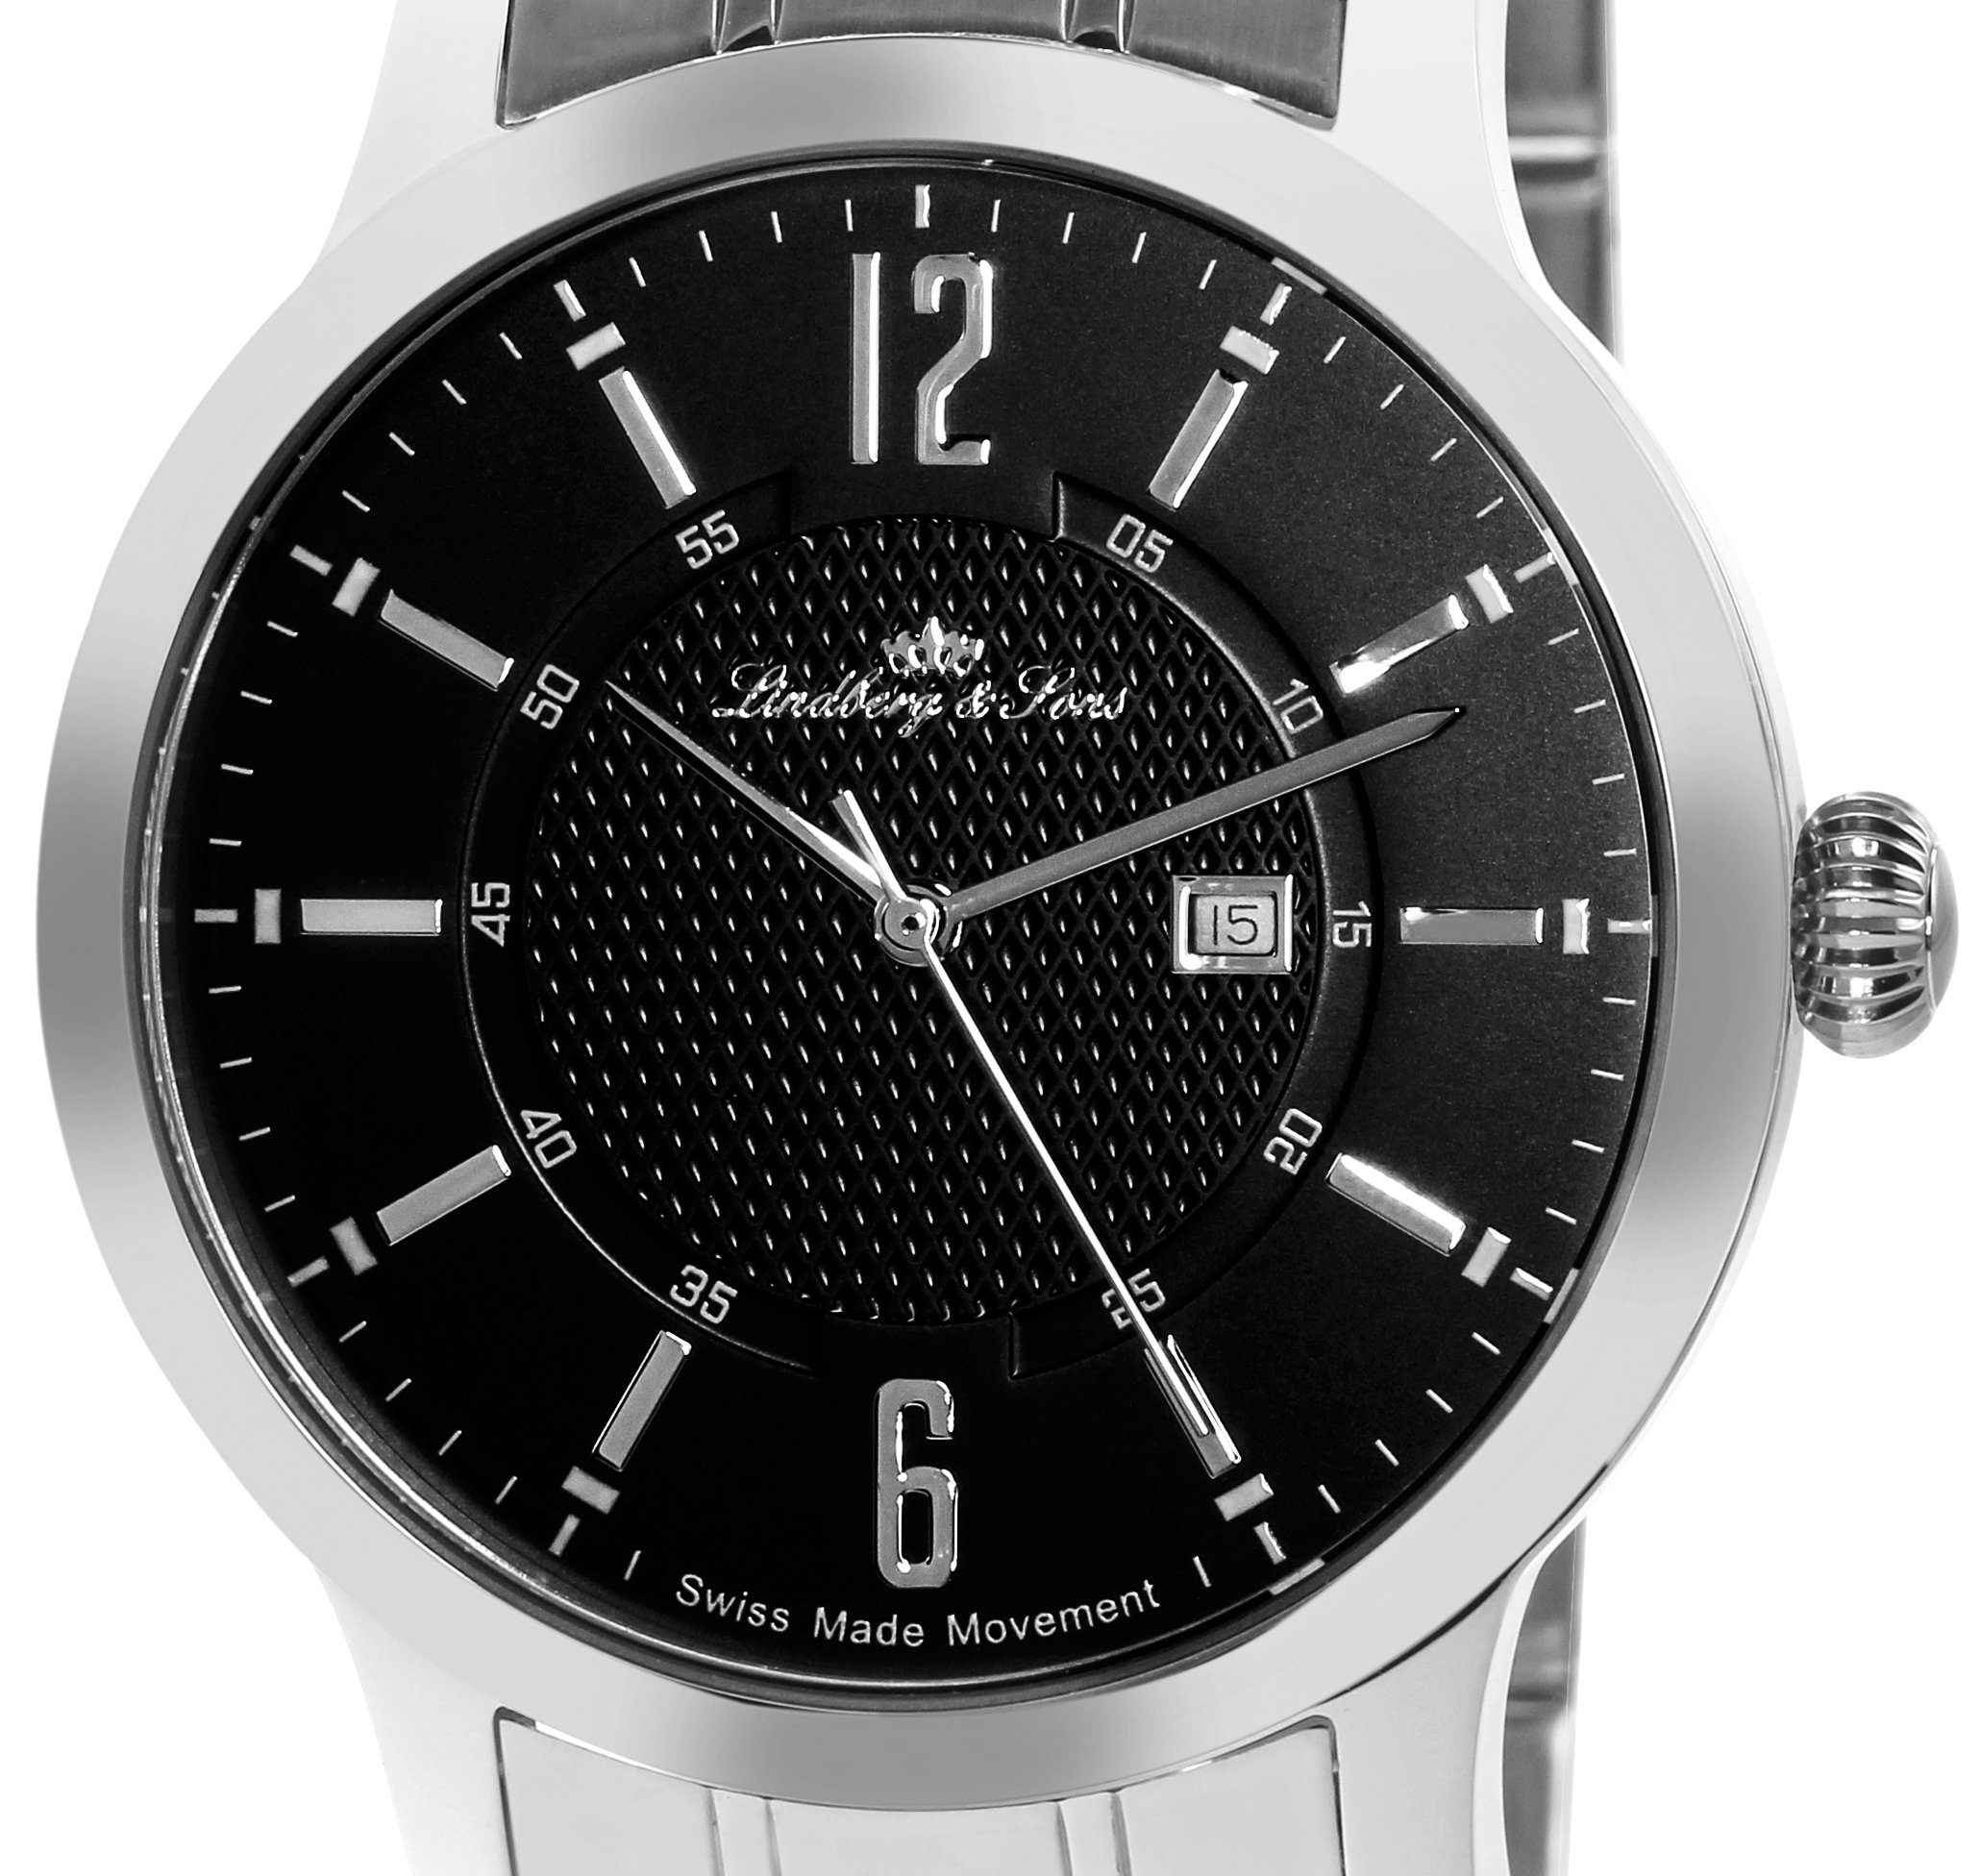 Stil und elegantem Lindberg&Sons Armband graziösem Uhr Quarzuhr mit